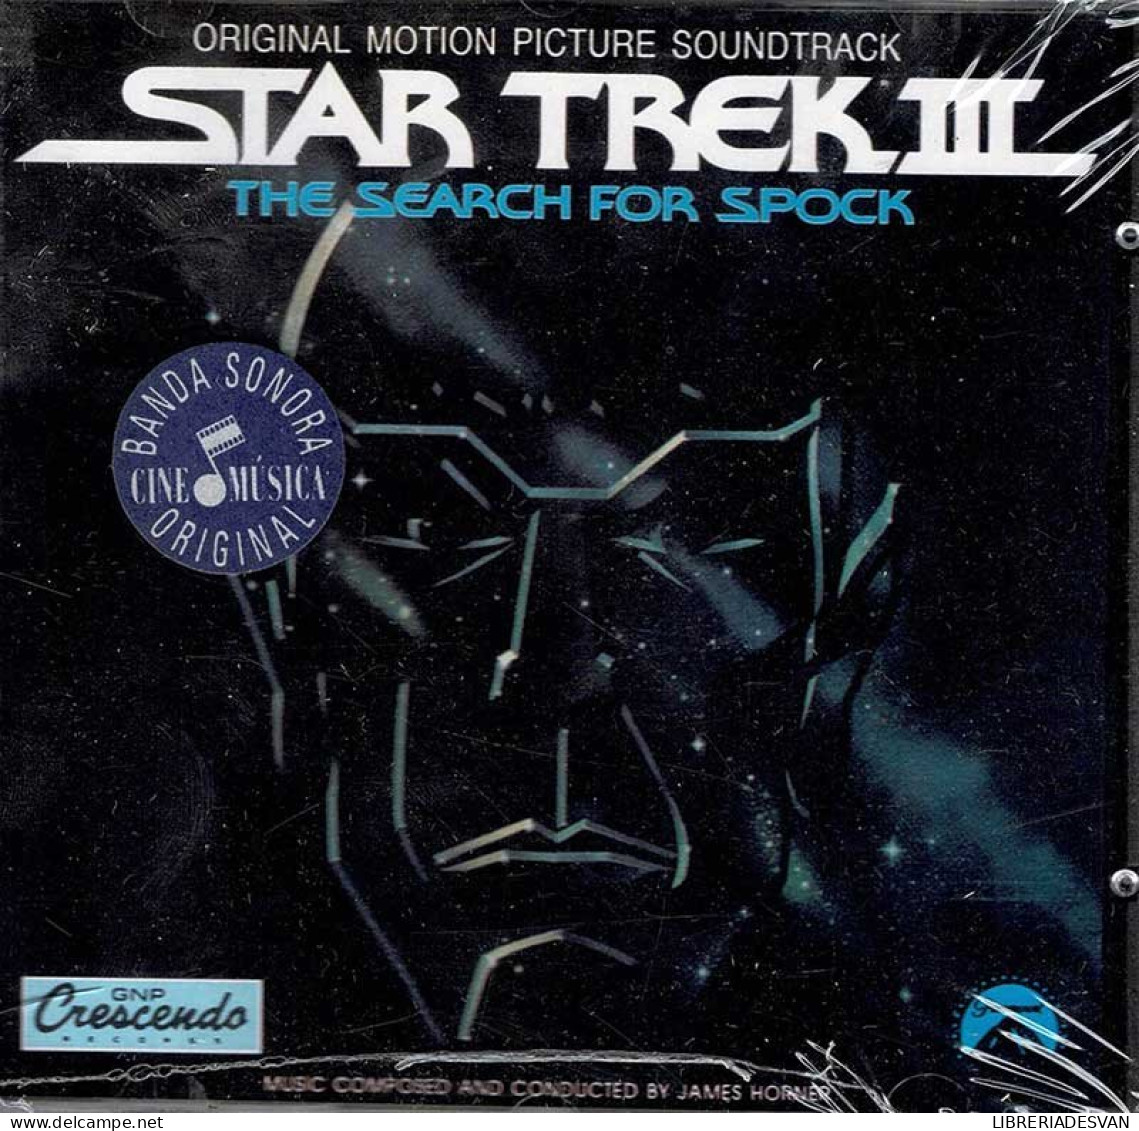 James Horner - Star Trek III: The Search For Spock (Original Motion Picture Soundtrack). CD - Soundtracks, Film Music